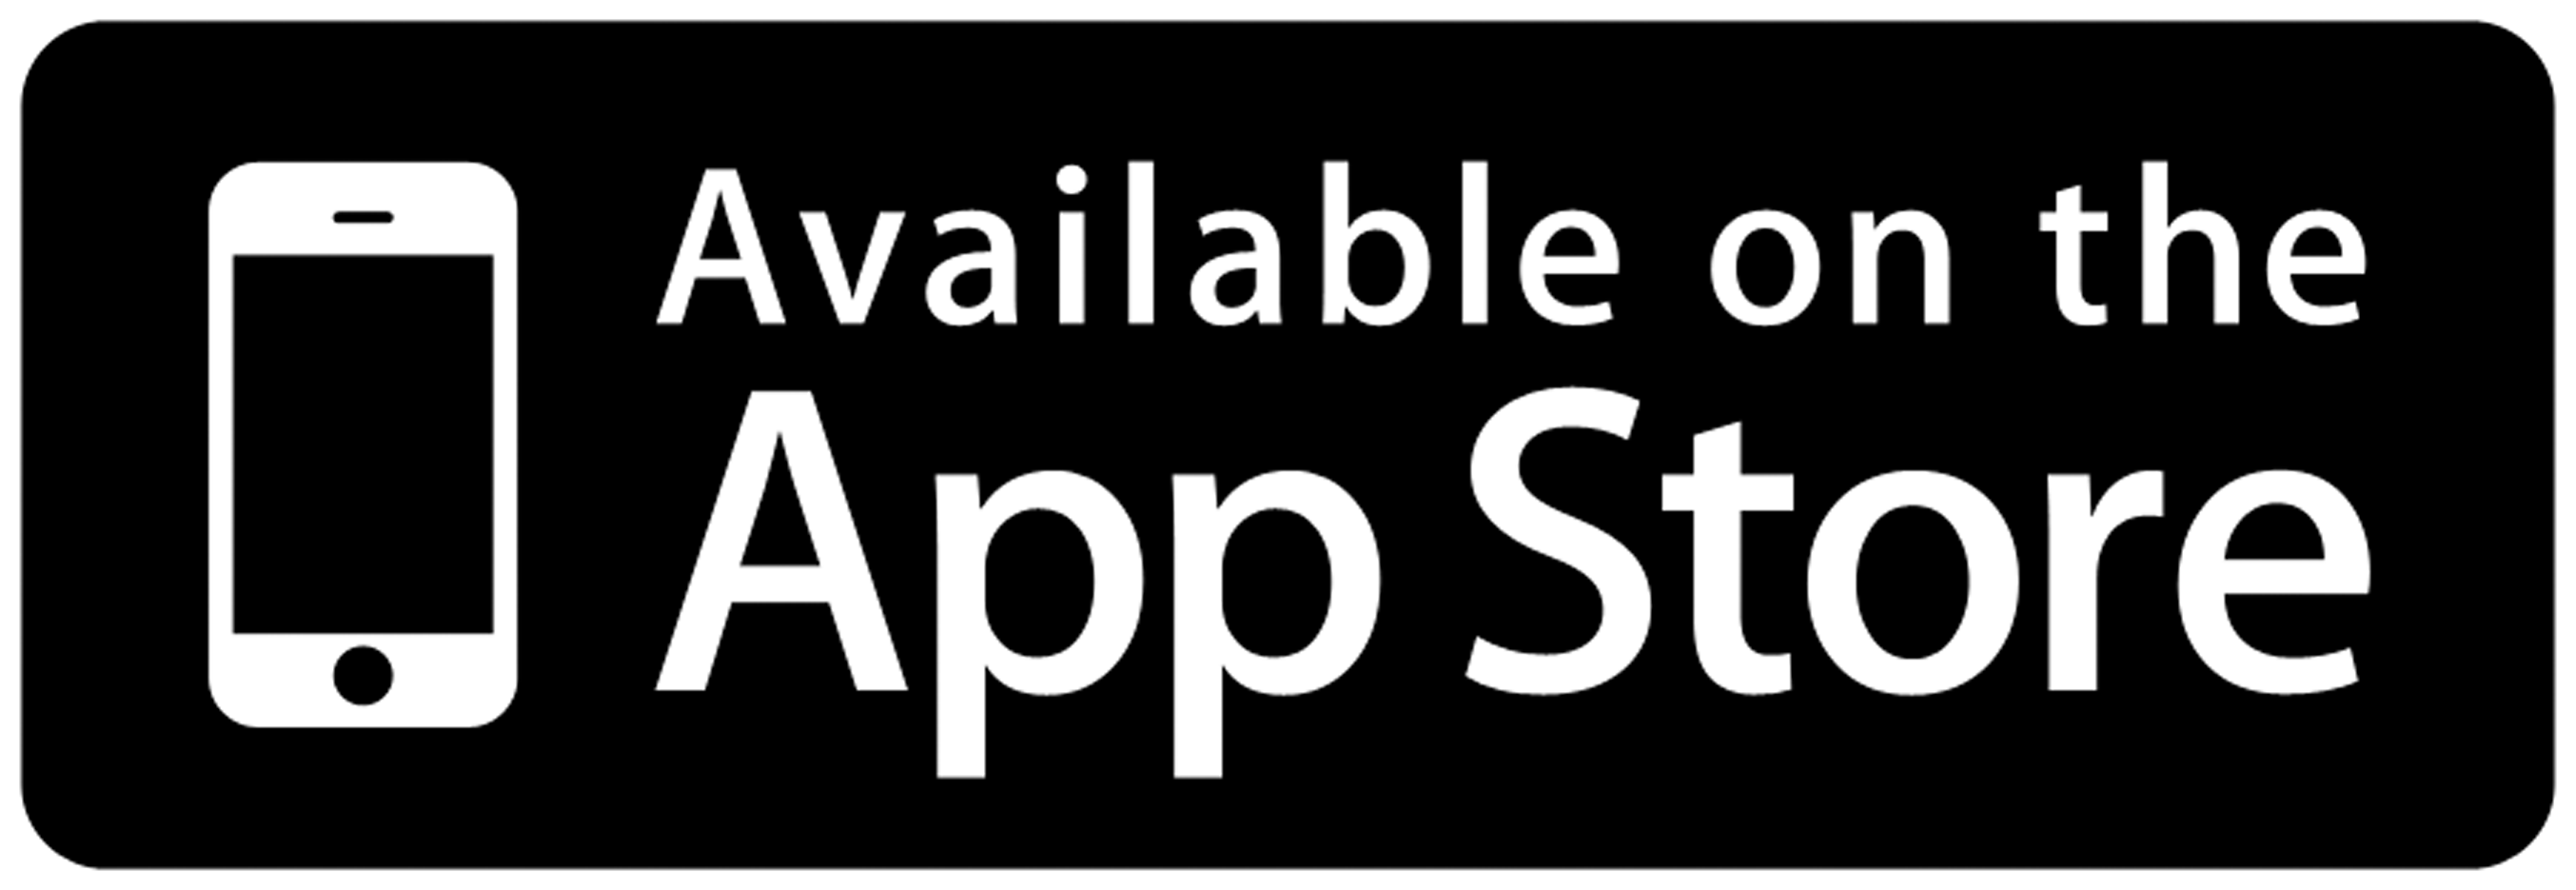 Установить ап стор. APPSTORE иконка. Apple Store значок. App Store приложения. Доступно в app Store.